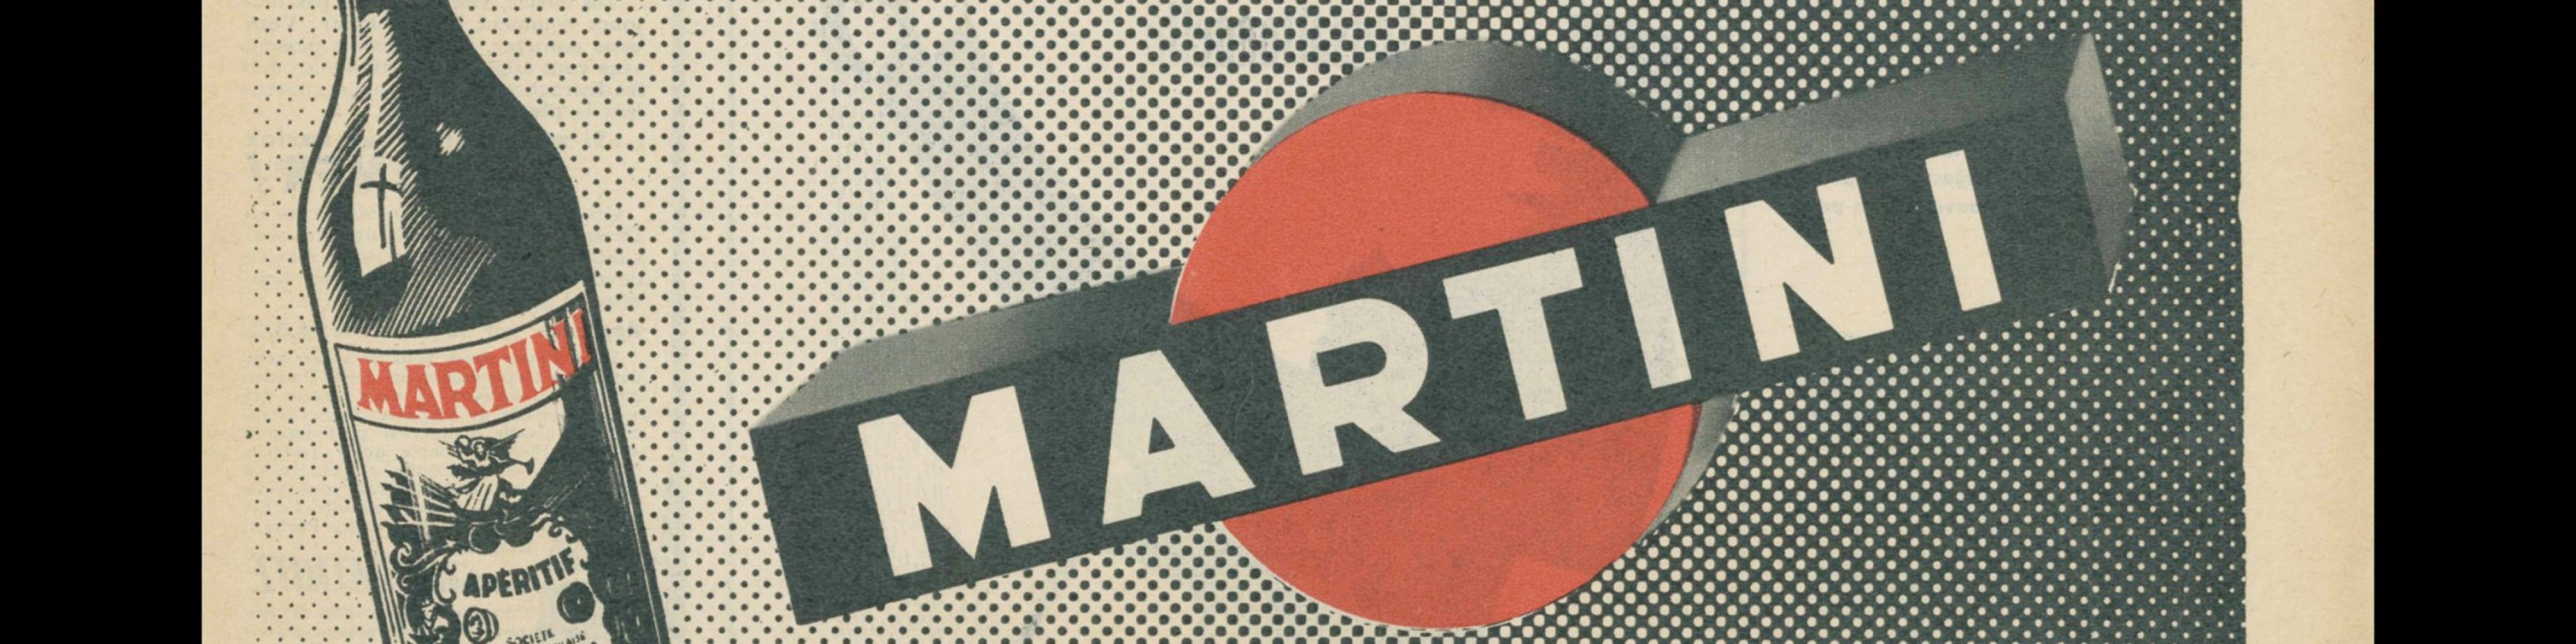 Martini, Press Advertisement, 1955